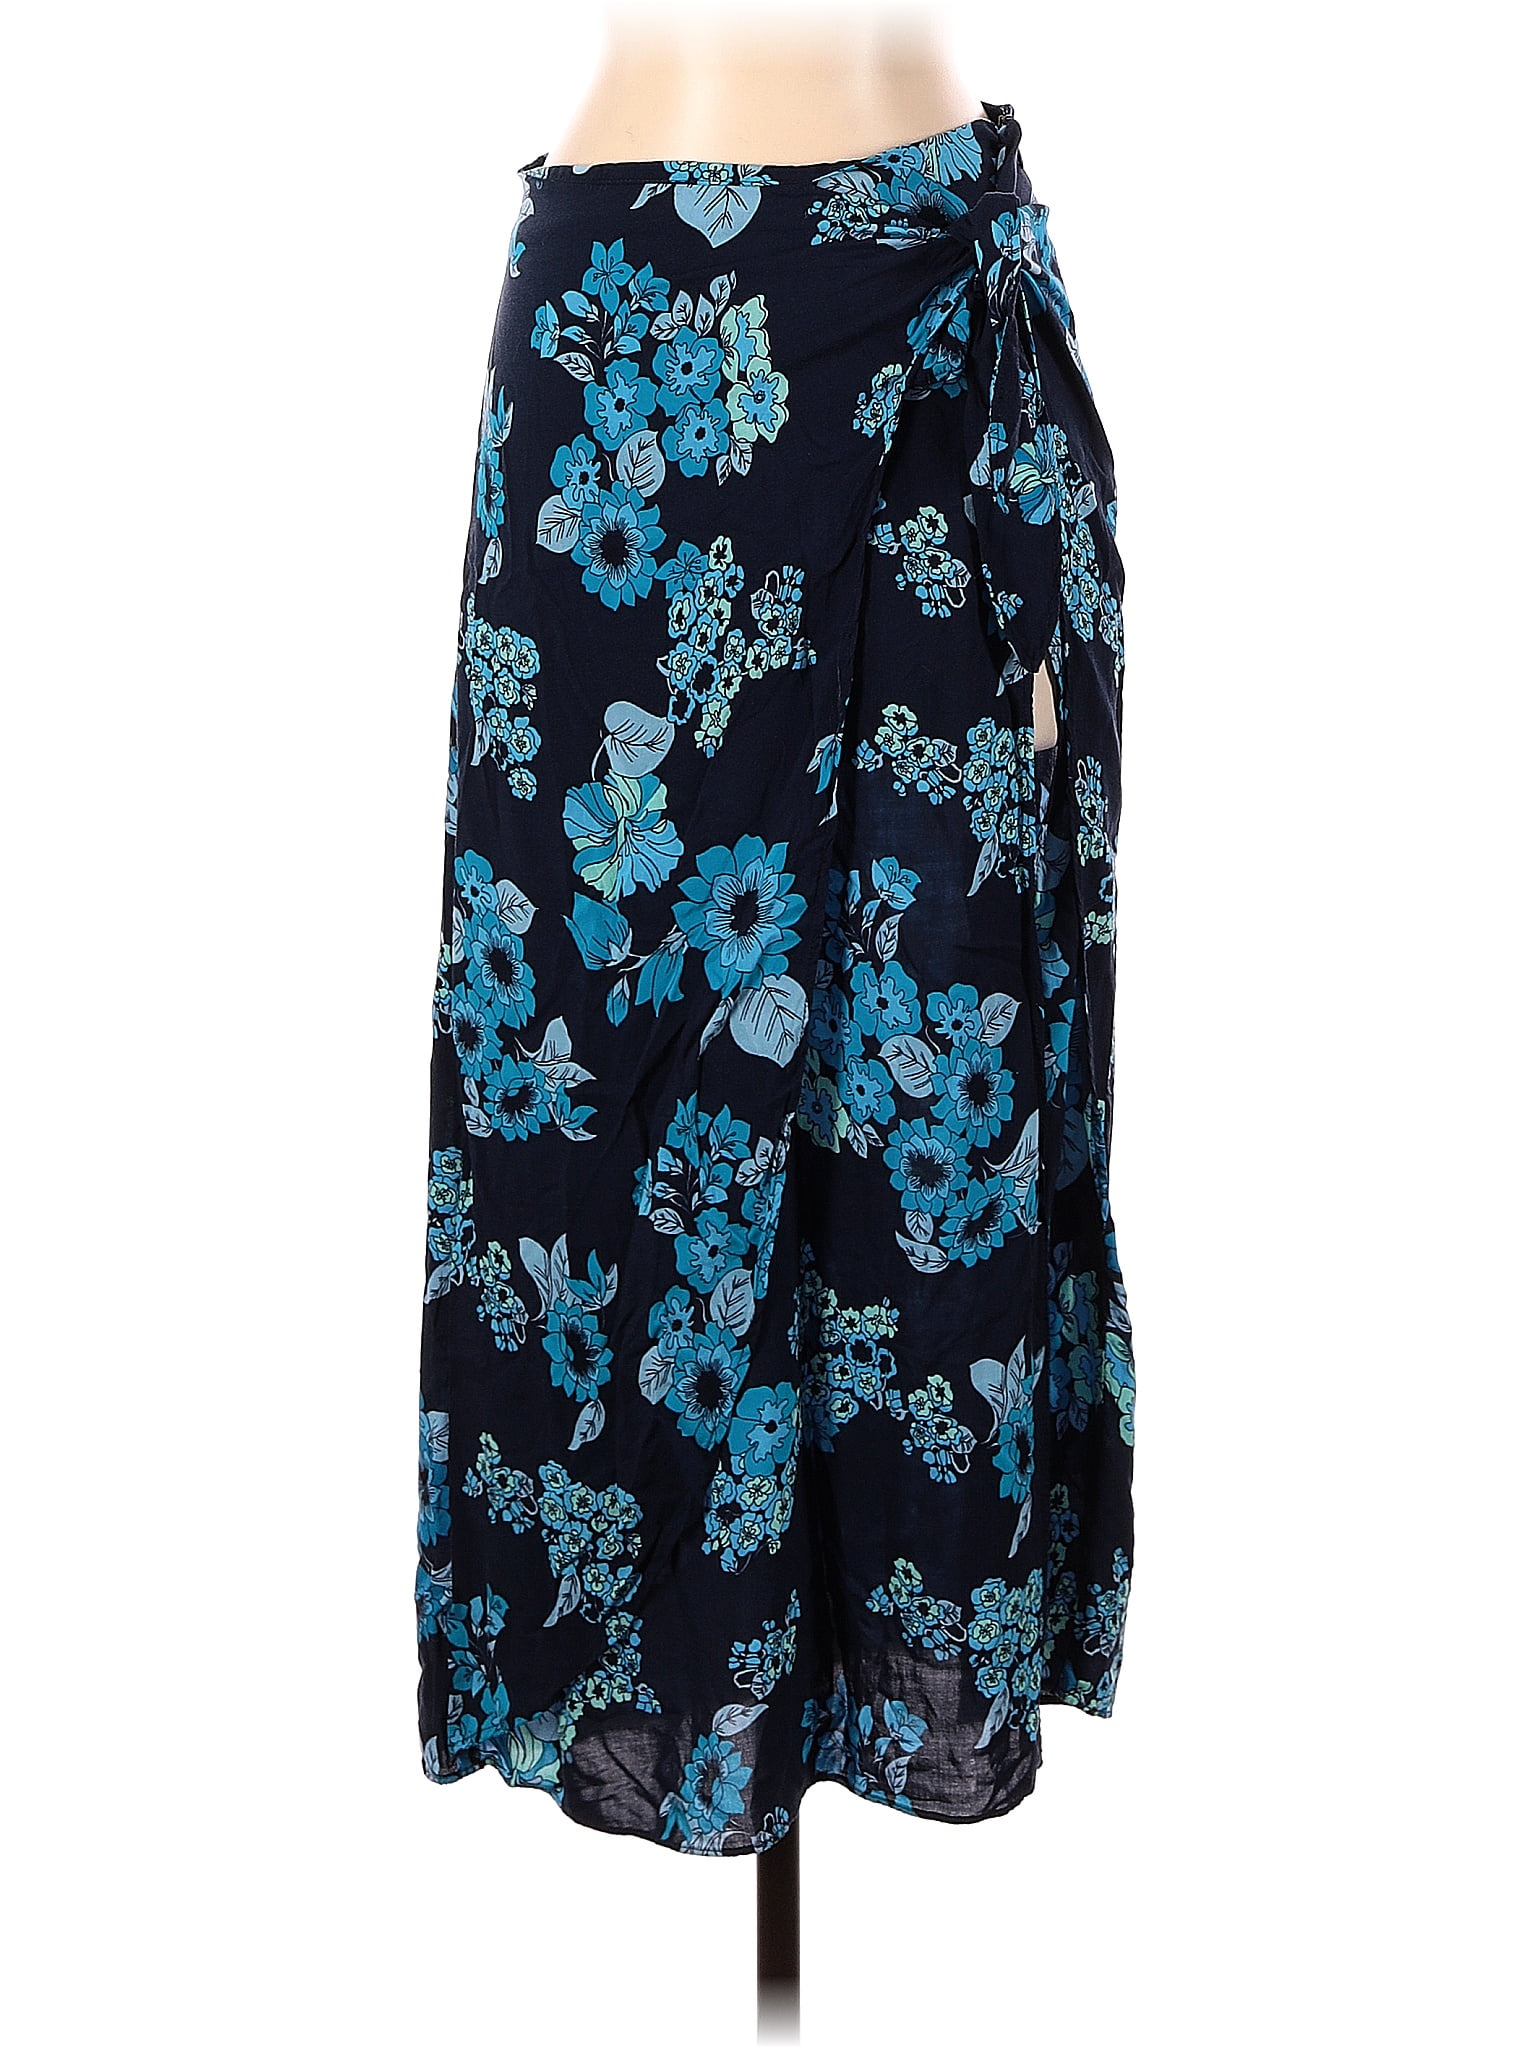 Brandy Melville 100% Viscose Blue Casual Dress Size 2 - 36% off